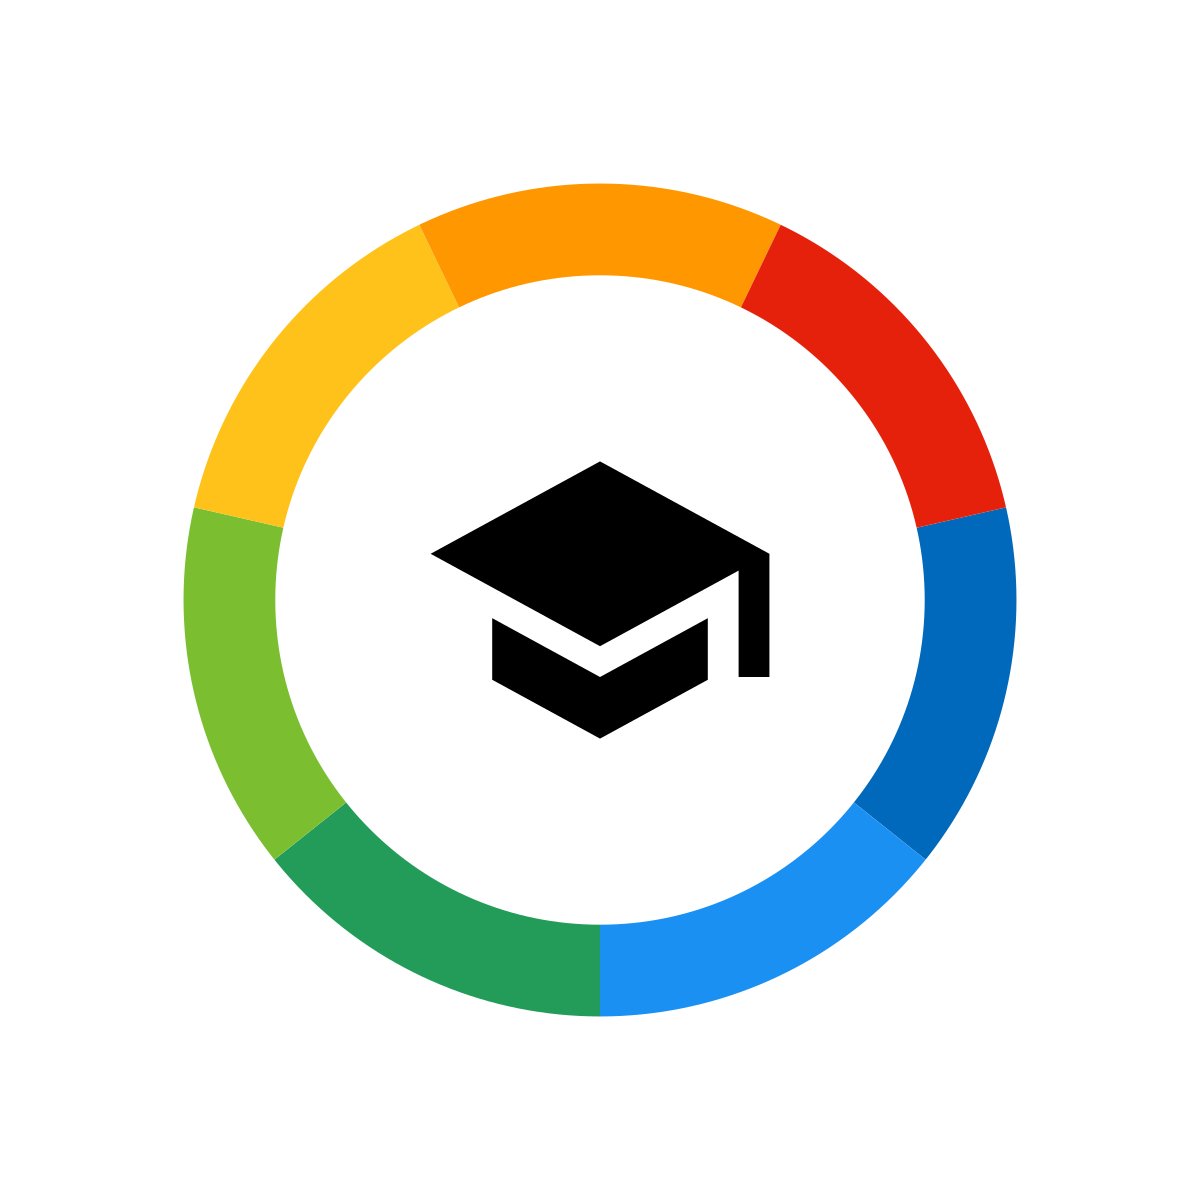 Open Scholarship Knowledge Base logo